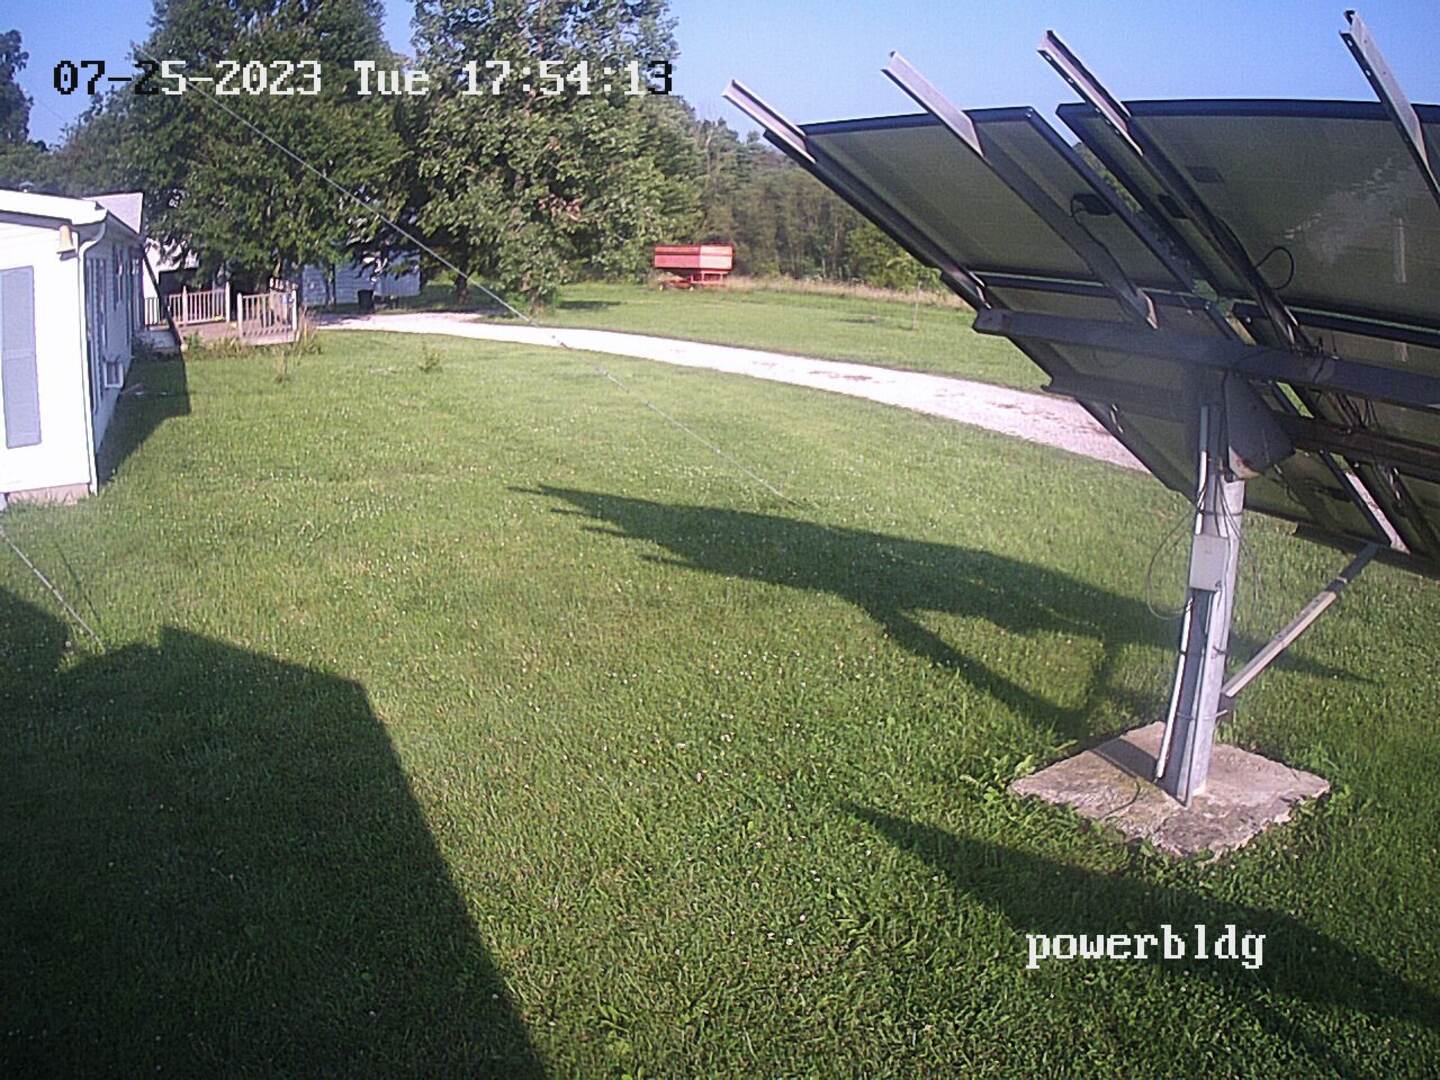 web cam 2 facing southwest at 30 feet